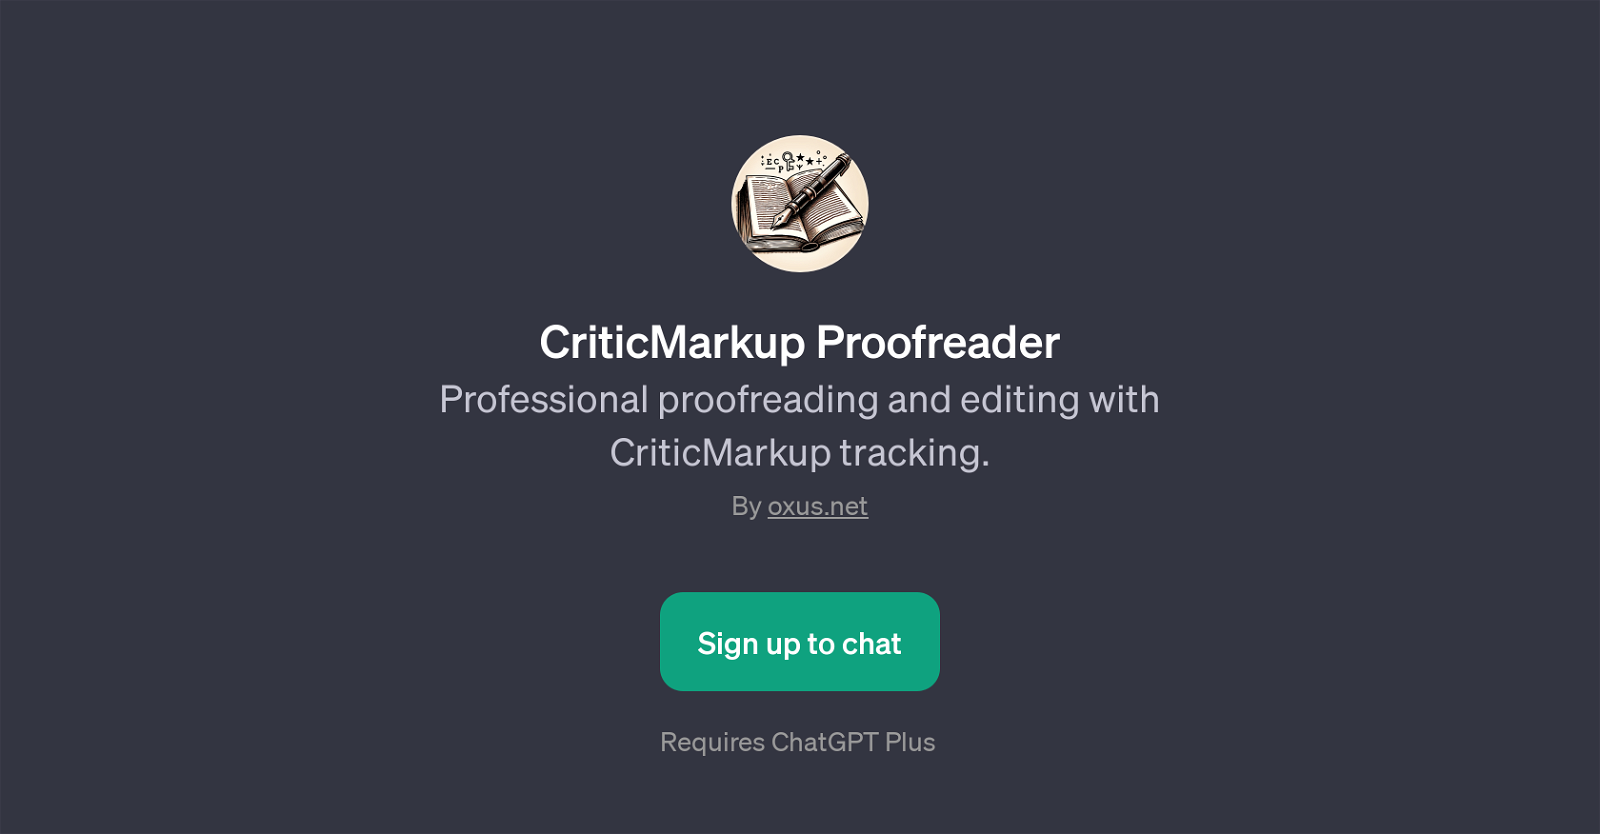 CriticMarkup Proofreader website